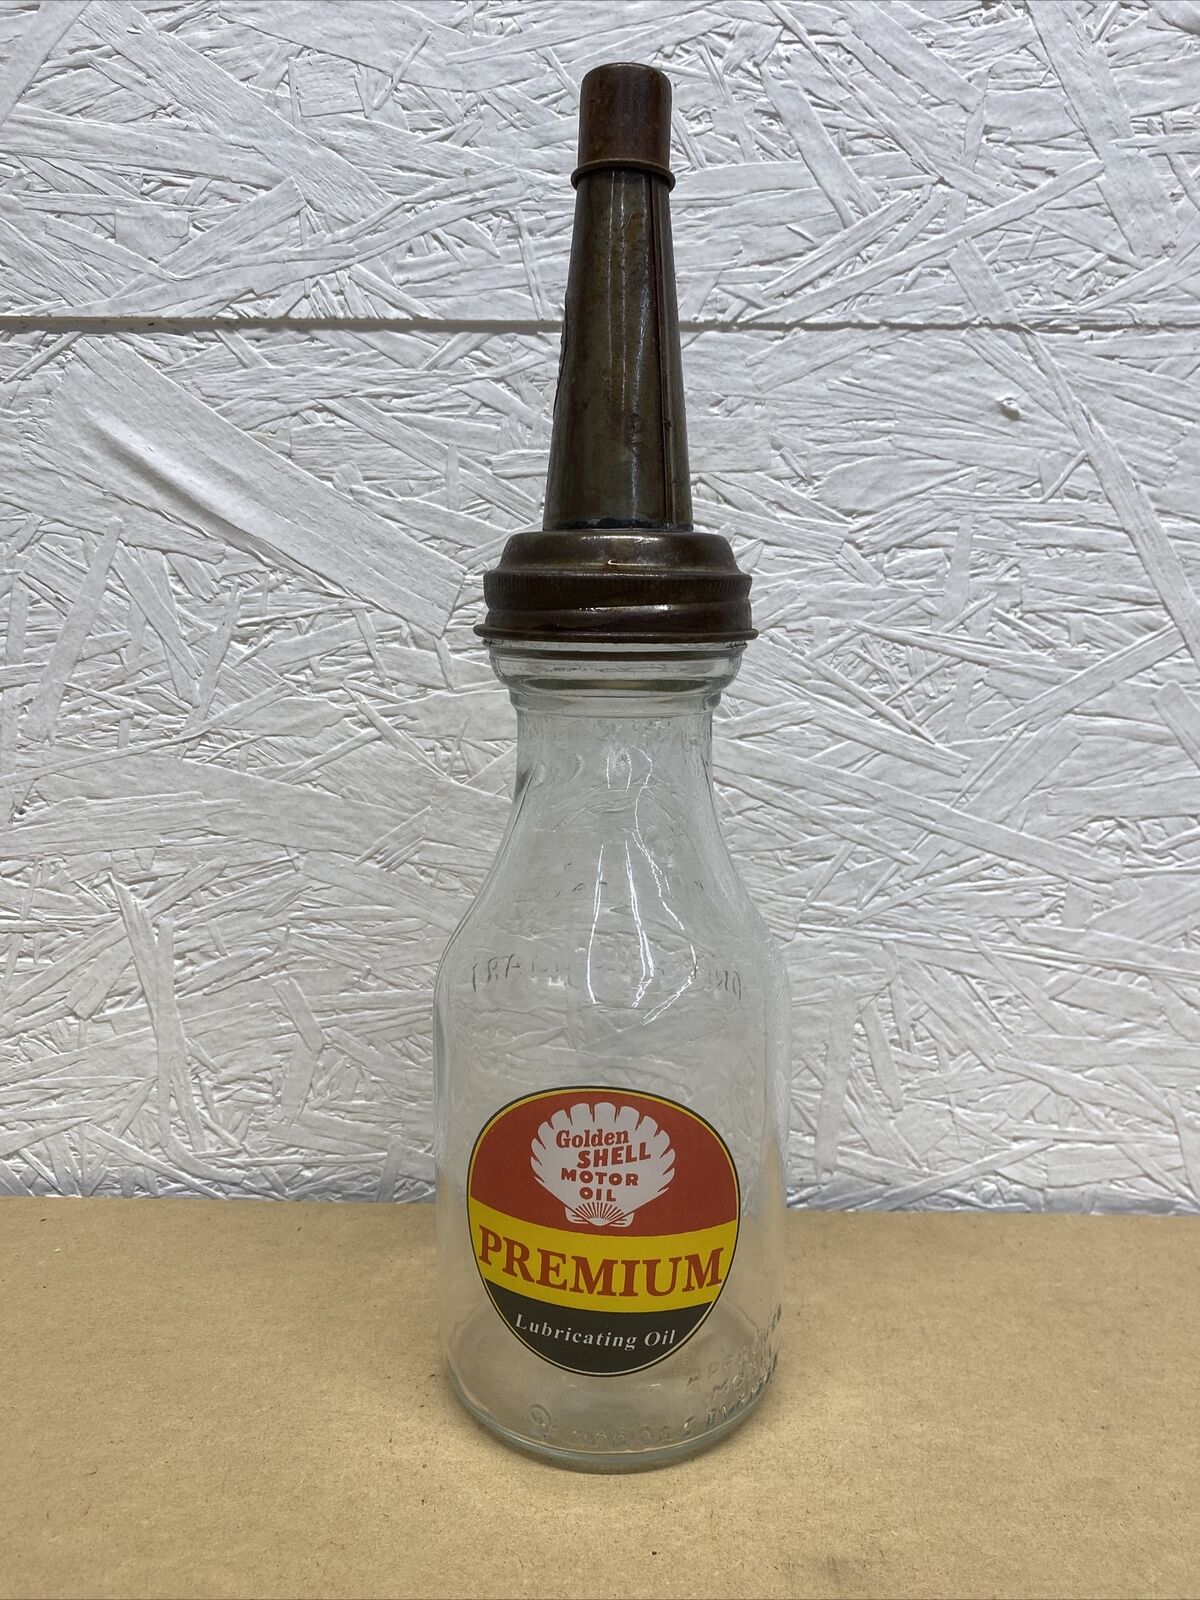 Premium Golden Shell Motor Oil Bottle Spout Cap Glass Vintage Style Gas Station